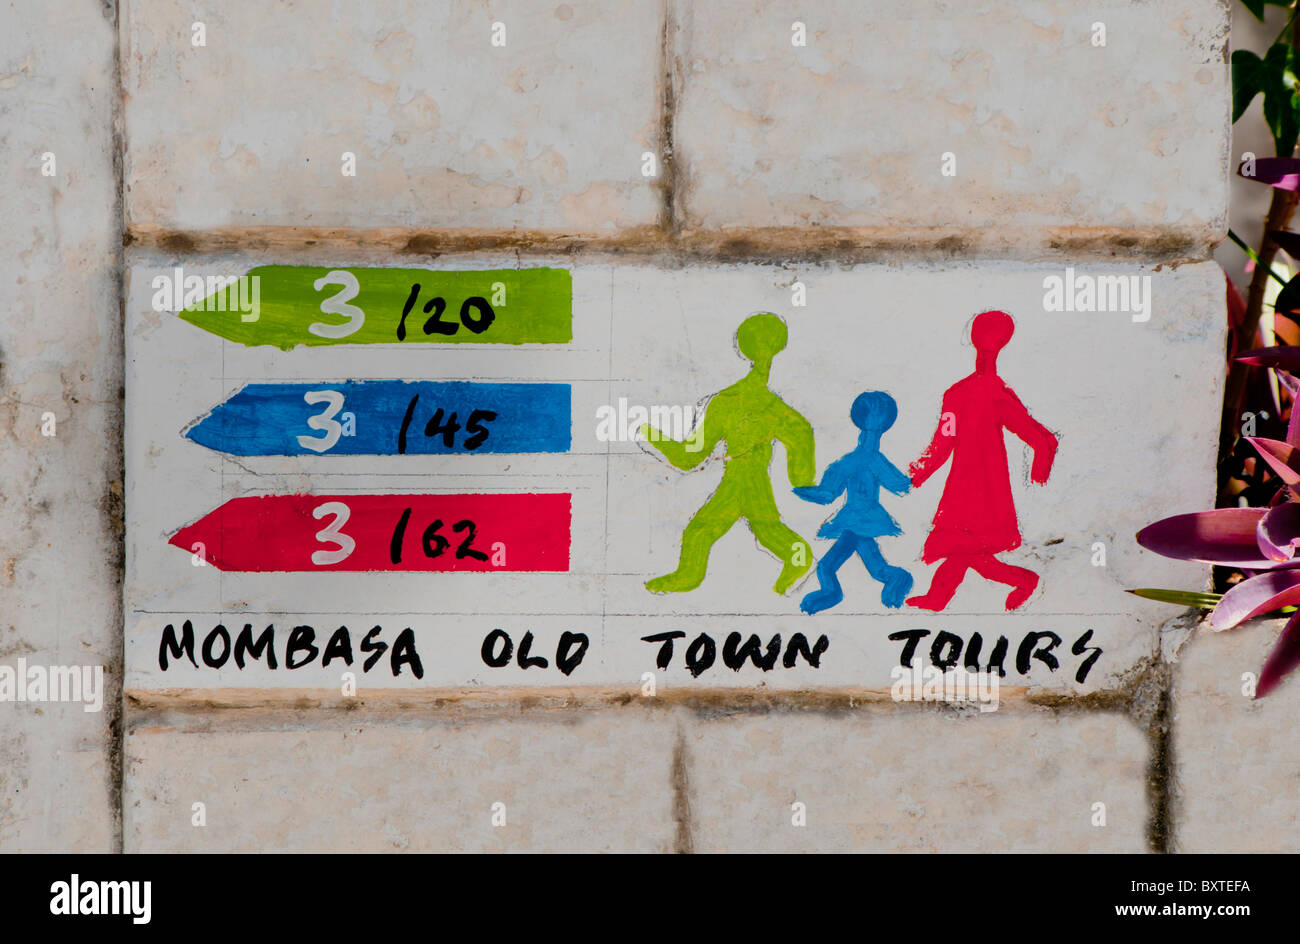 Africa orientale, Kenya, la città vecchia di Mombasa Walking Tour guida Foto Stock